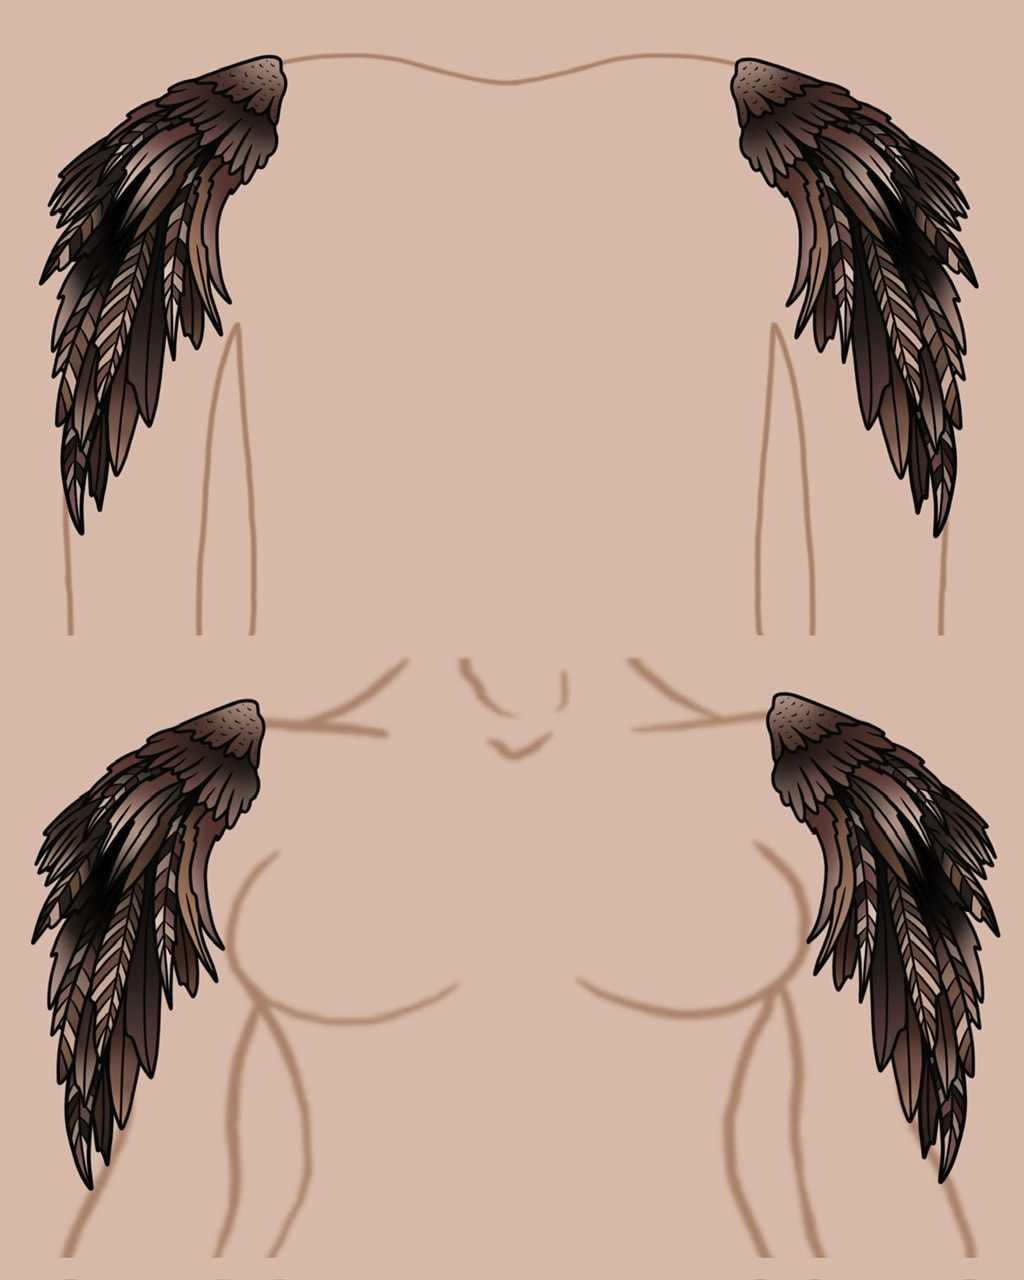 Hawk eagle feather shoulder cap tattoo design.